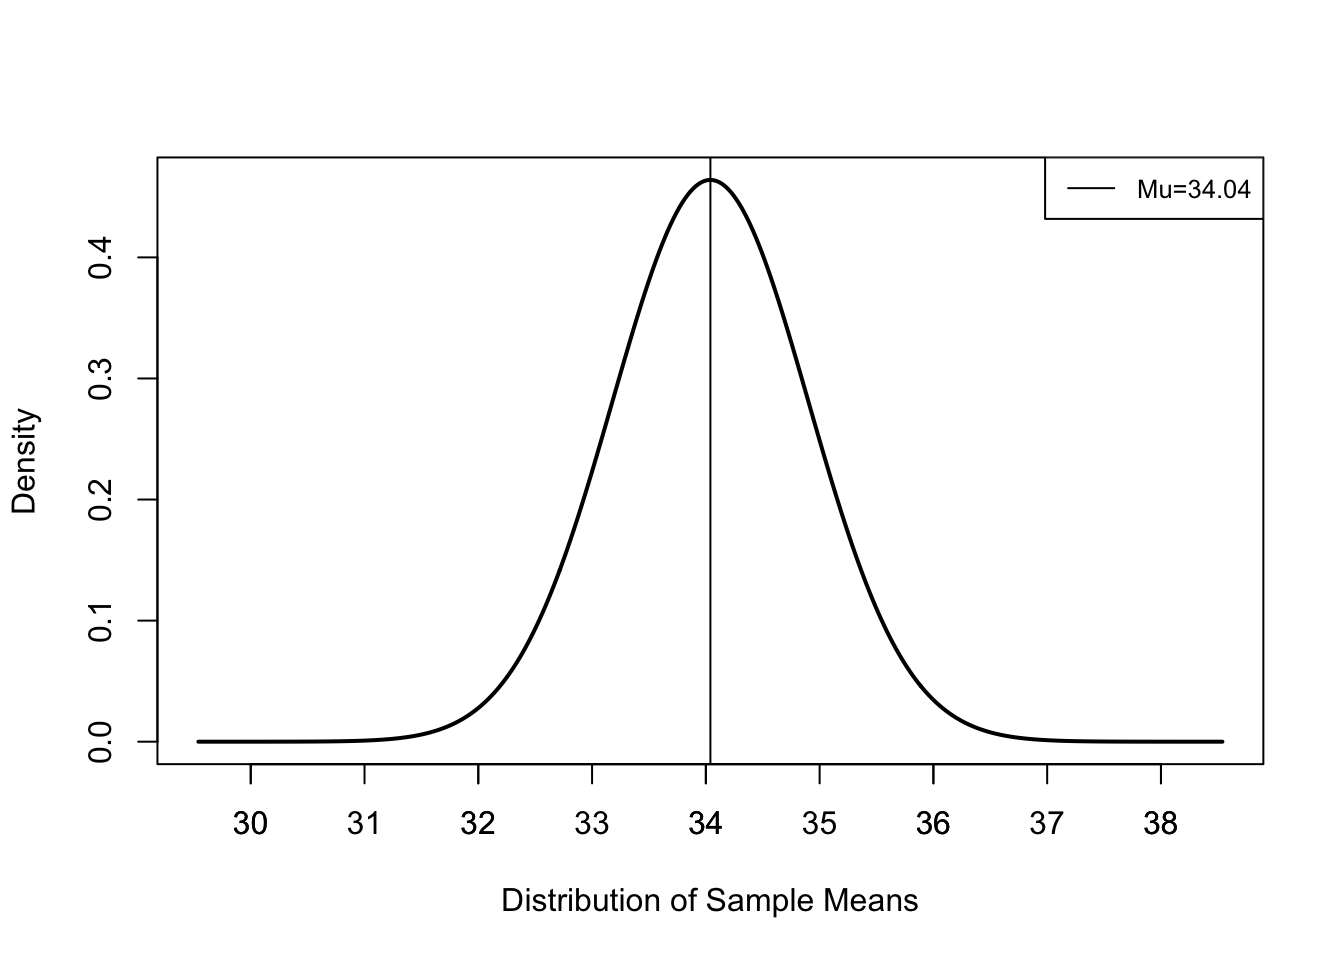 A Theoretical Sampling Distribution, mu=34.04